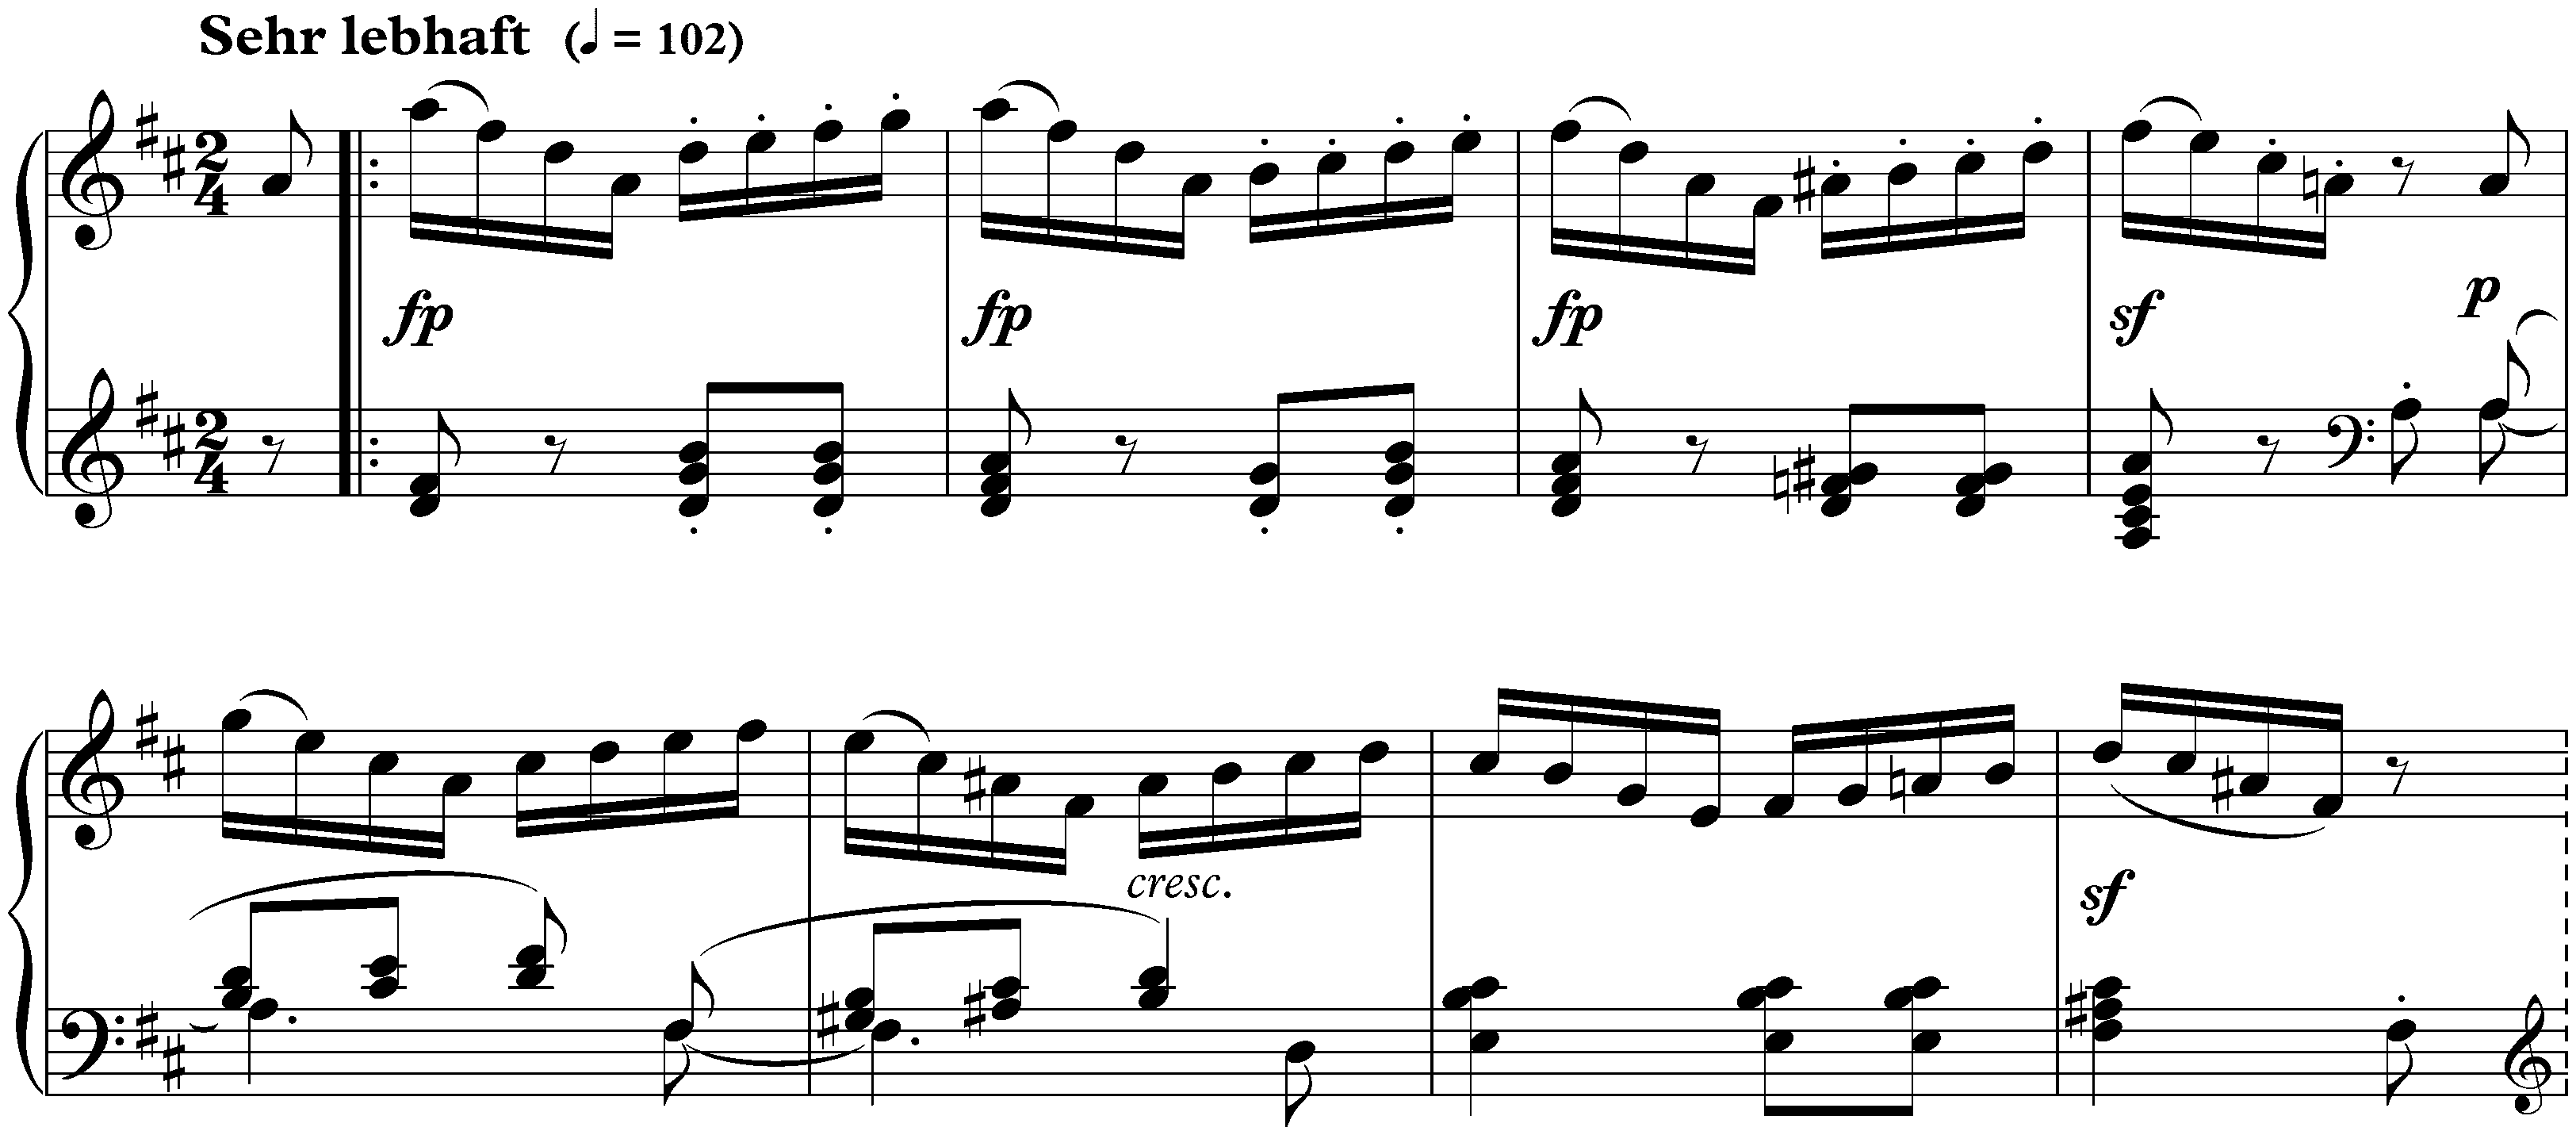 Sonate für die Jugend in D major, op. 118 no. 2; 4. Kindergesellschaft: Sehr lebhaft